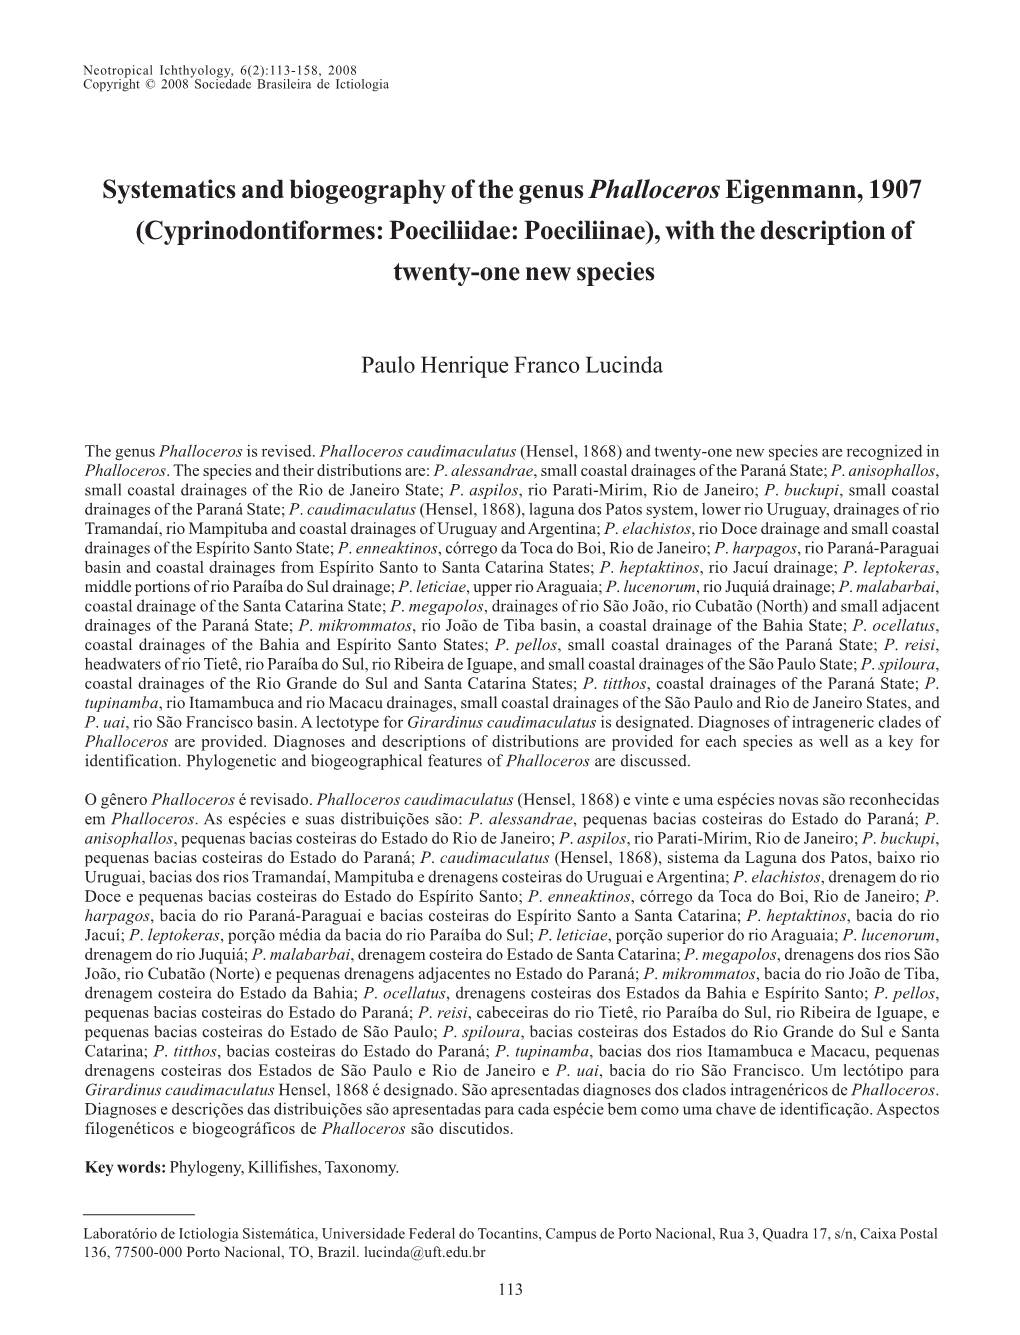 Systematics and Biogeography of the Genus Phalloceros Eigenmann, 1907 (Cyprinodontiformes: Poeciliidae: Poeciliinae), with the Description of Twenty-One New Species